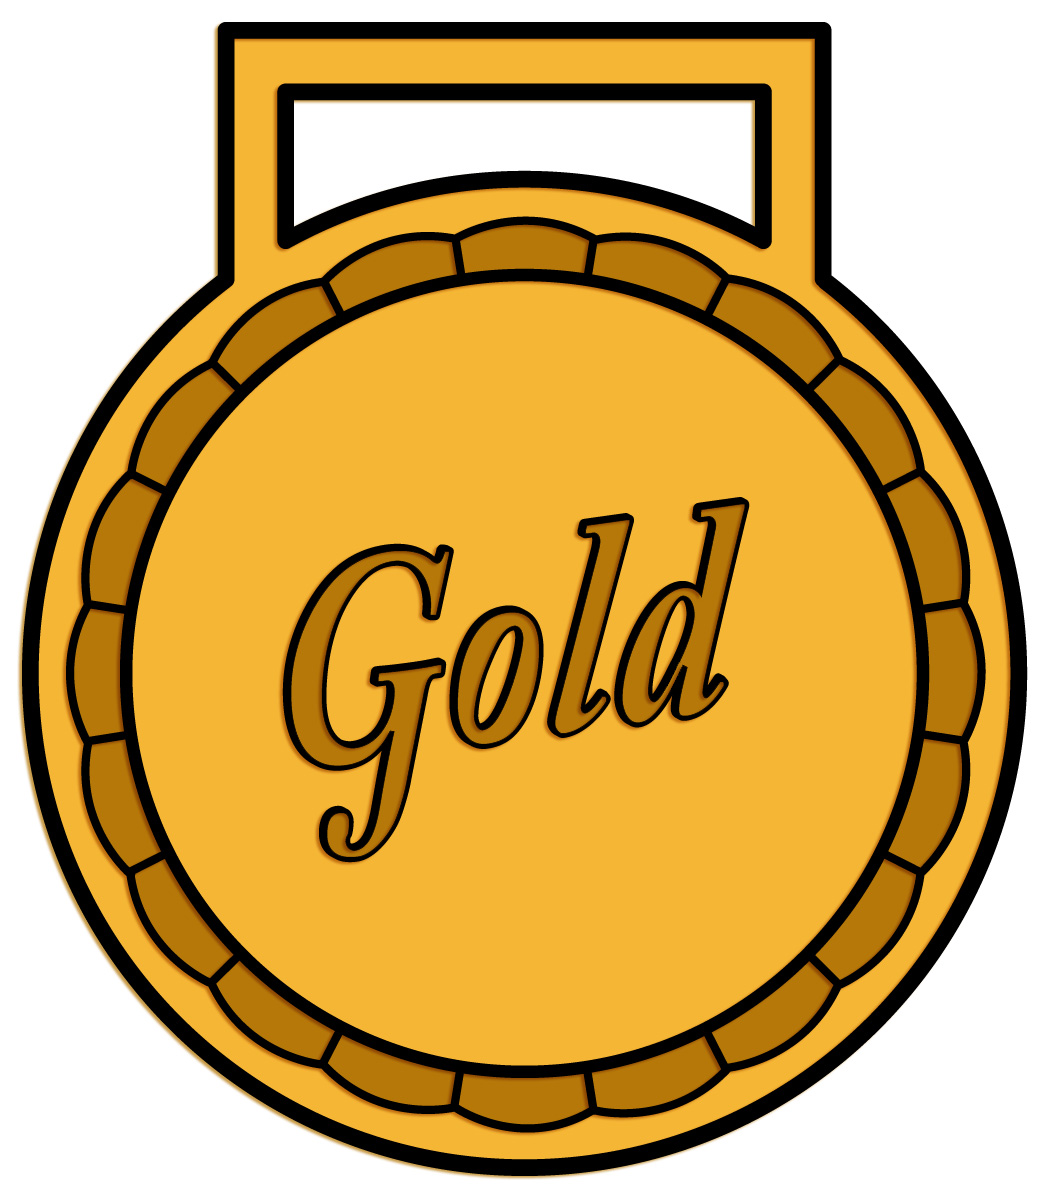 Gold Star Medal Clipart Gold star meda.